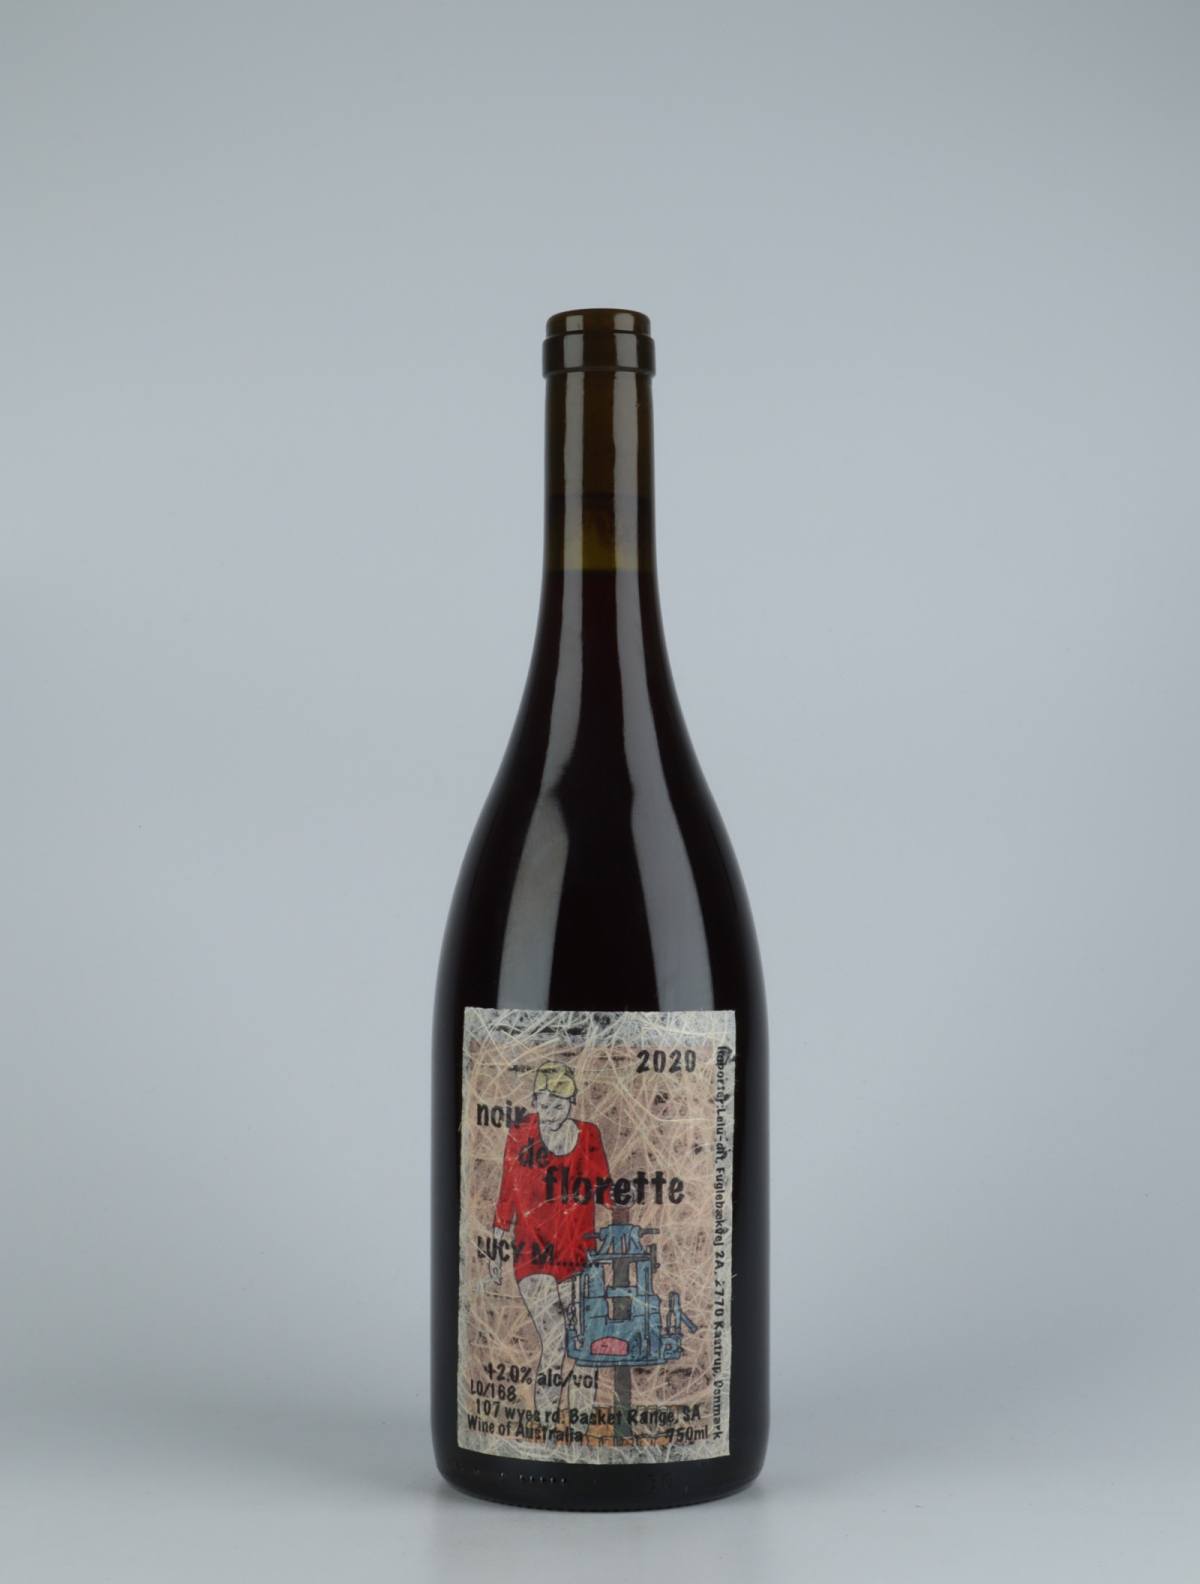 A bottle 2020 Noir de Florette Red wine from Lucy Margaux, Adelaide Hills in Australia